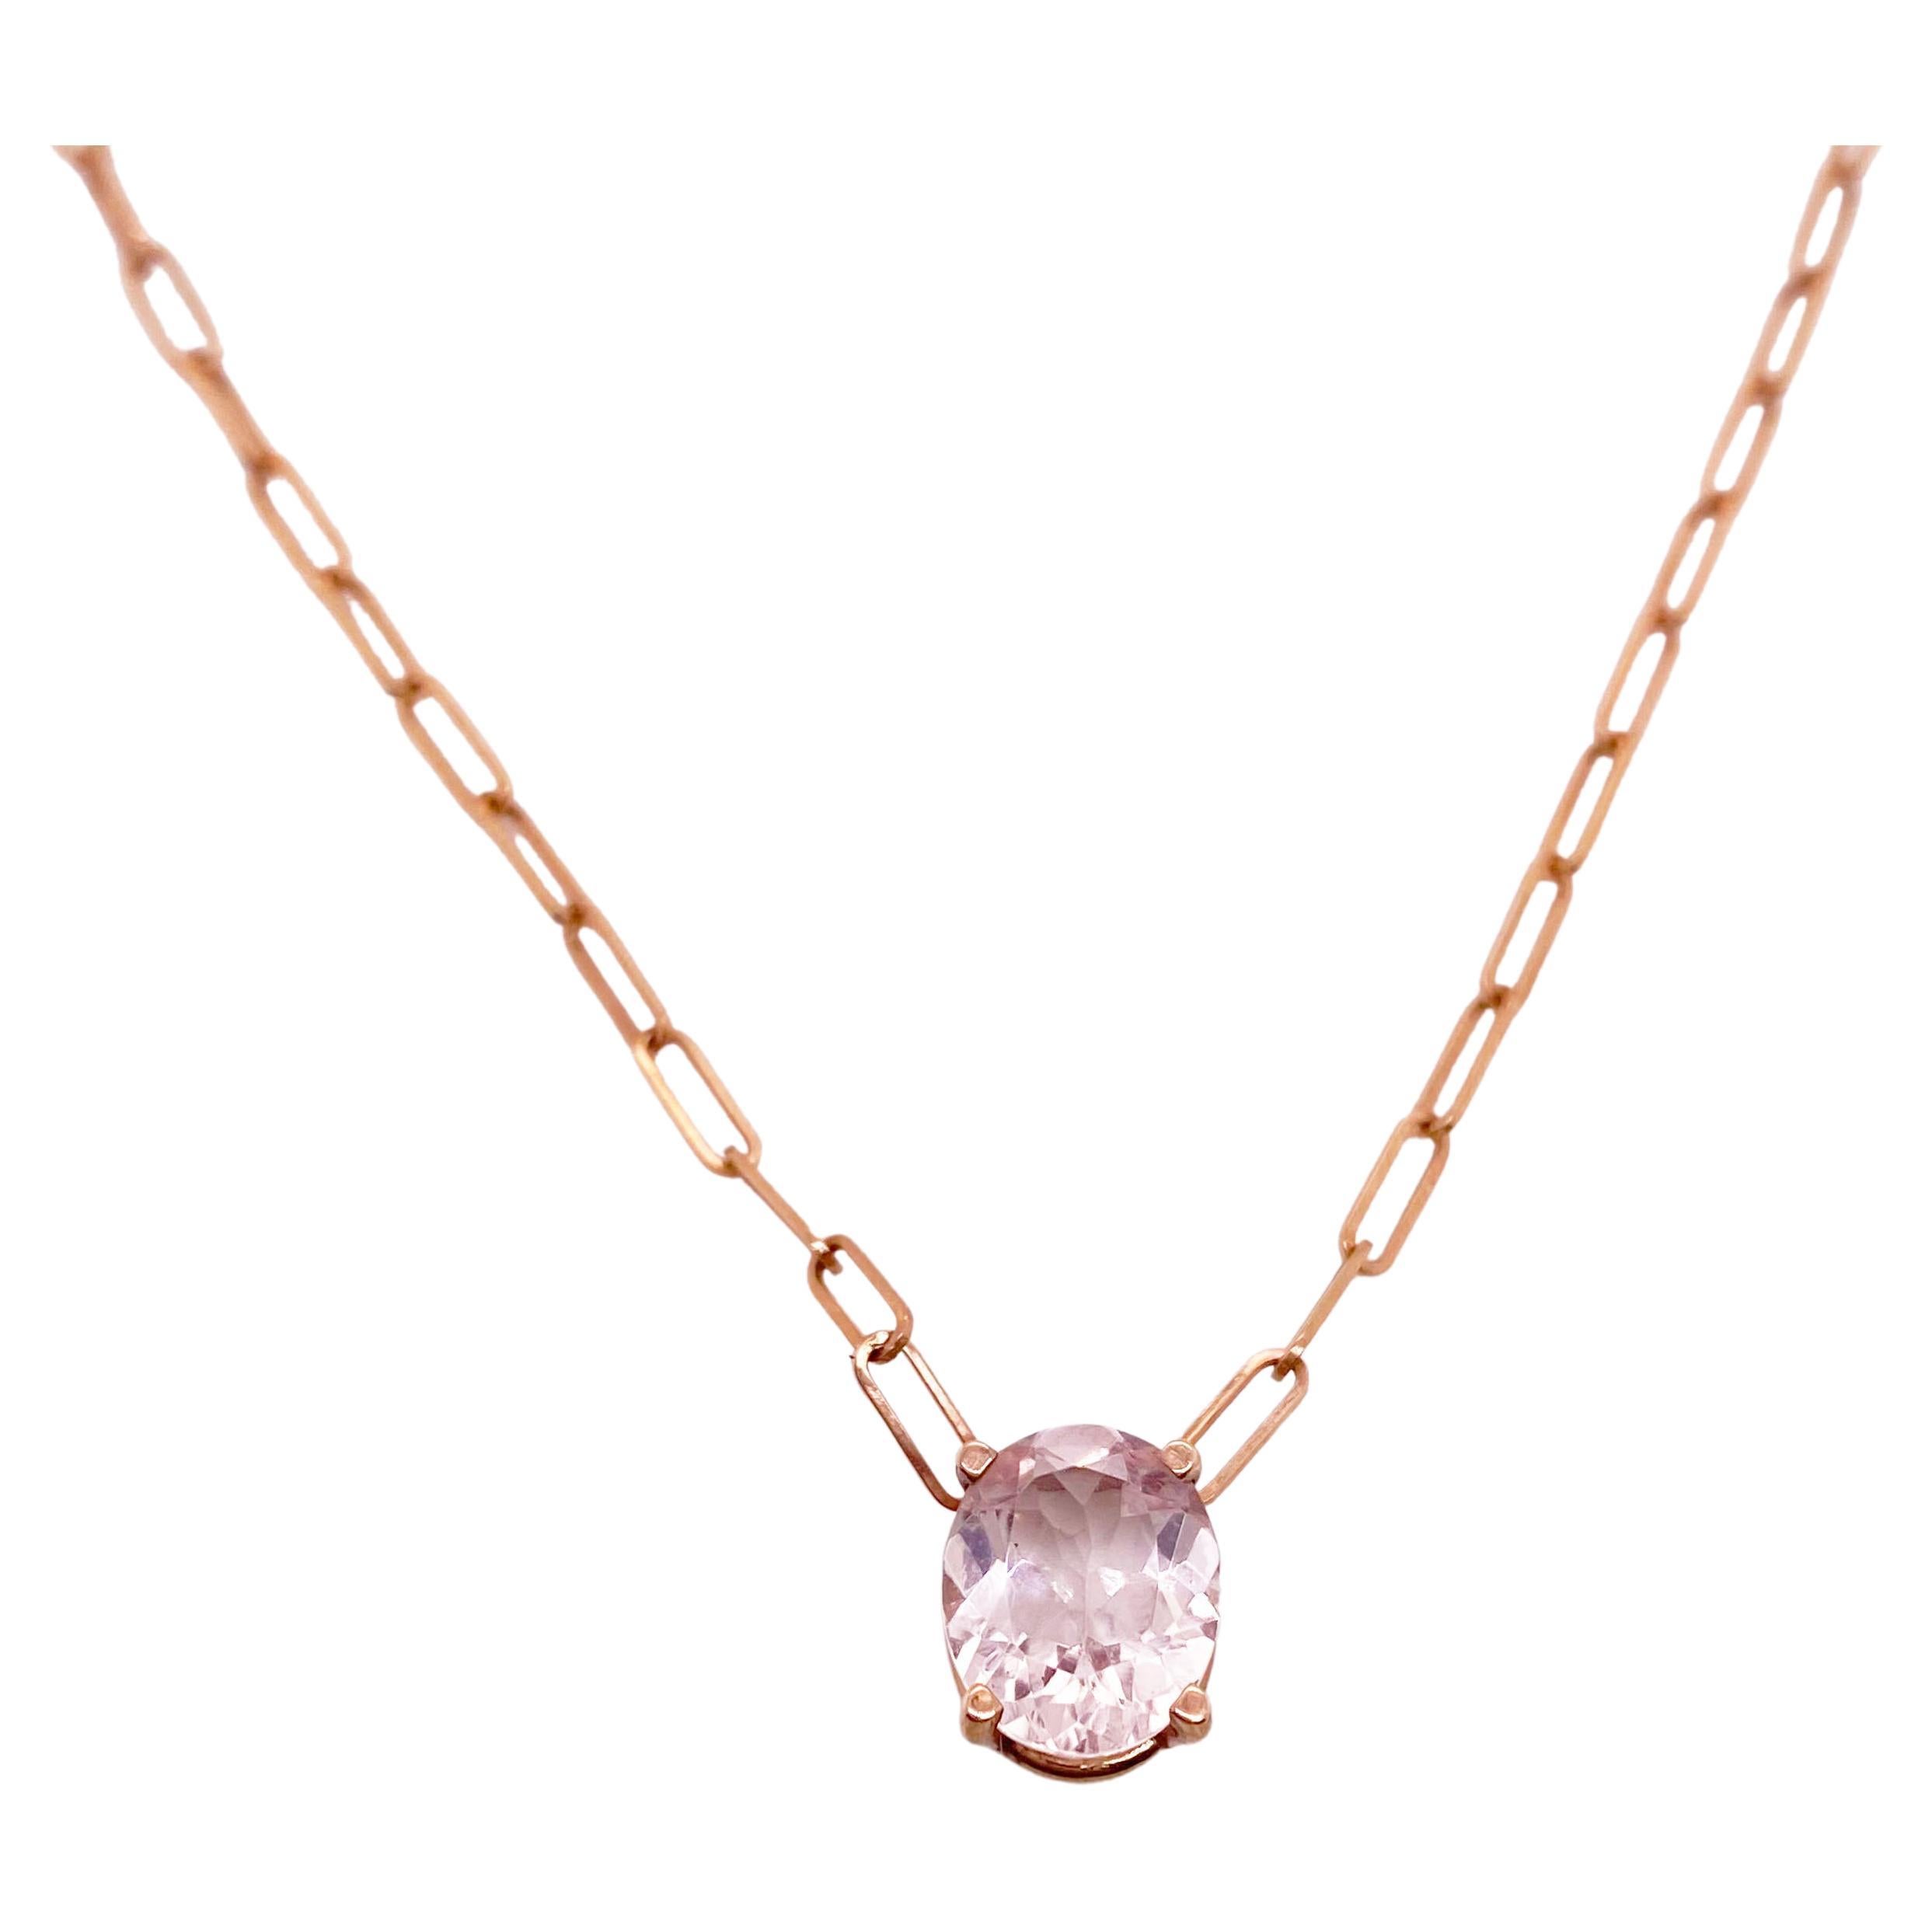 2.32 Carat Morganite Gemstone Paperclip Necklace 14K Rose Gold Oval Gemstone For Sale